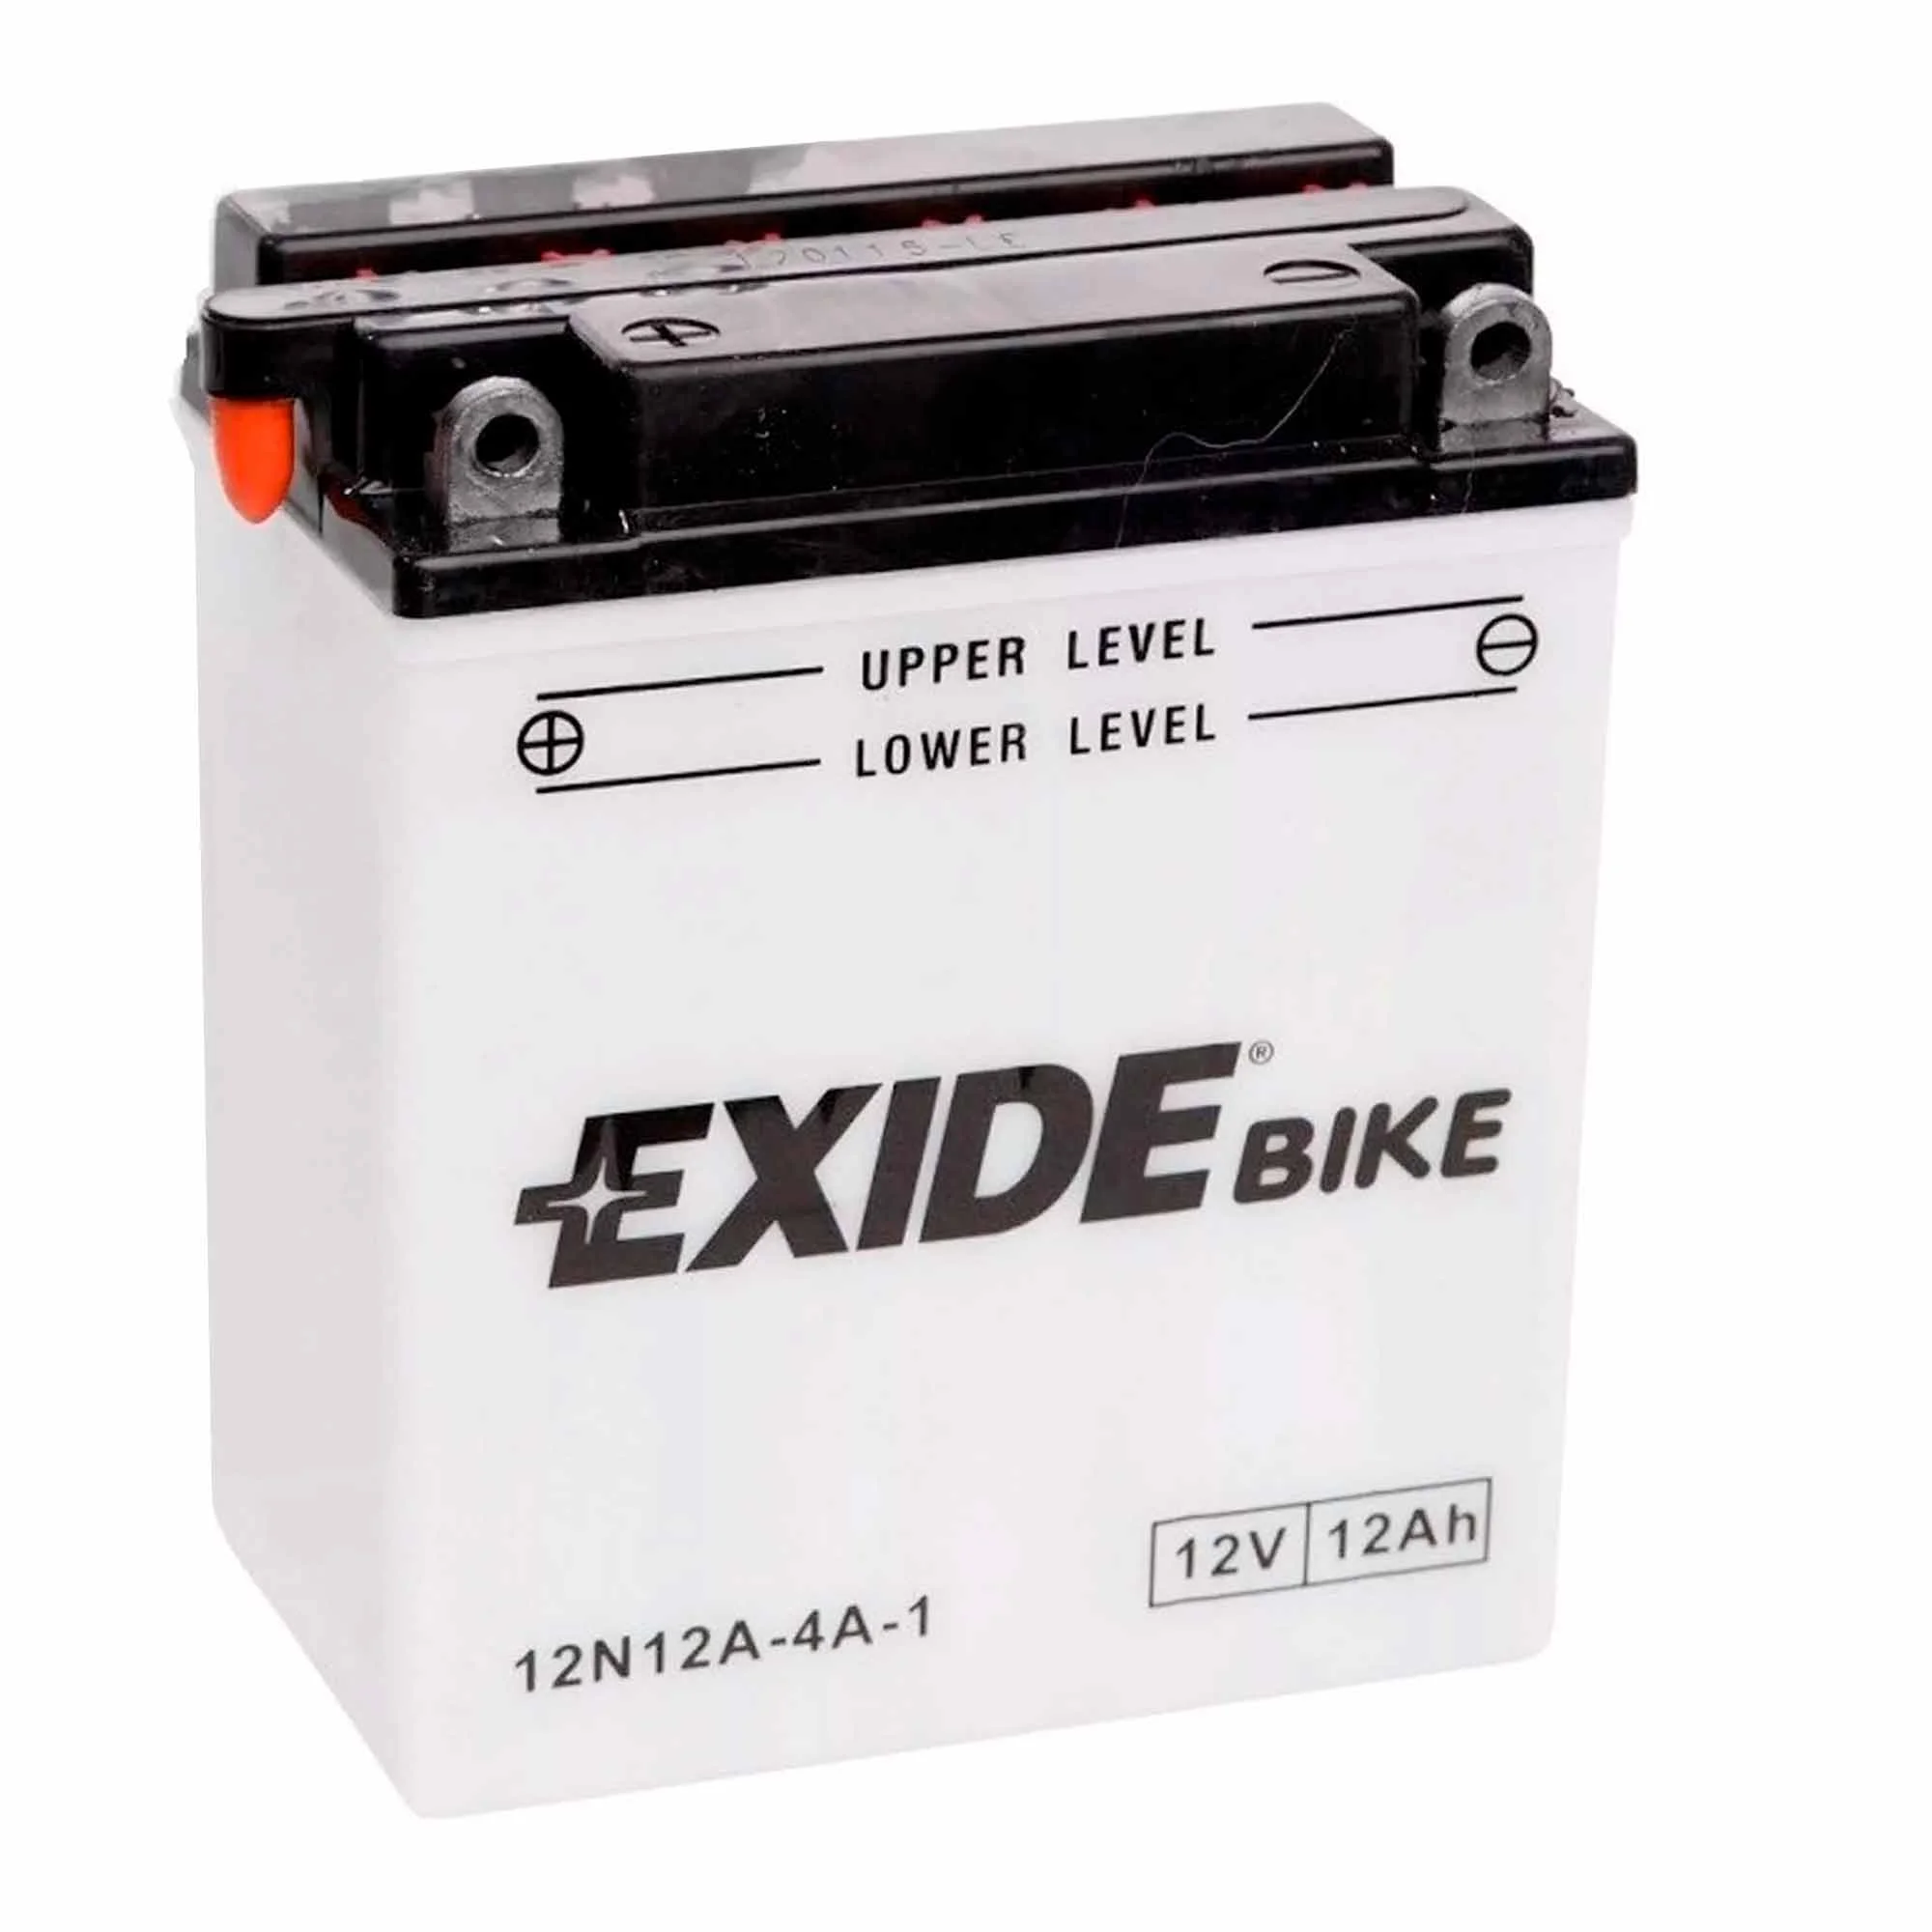 Мото аккумулятор EXIDE 6CT-12Ah Аз (12N12A-4A-1)